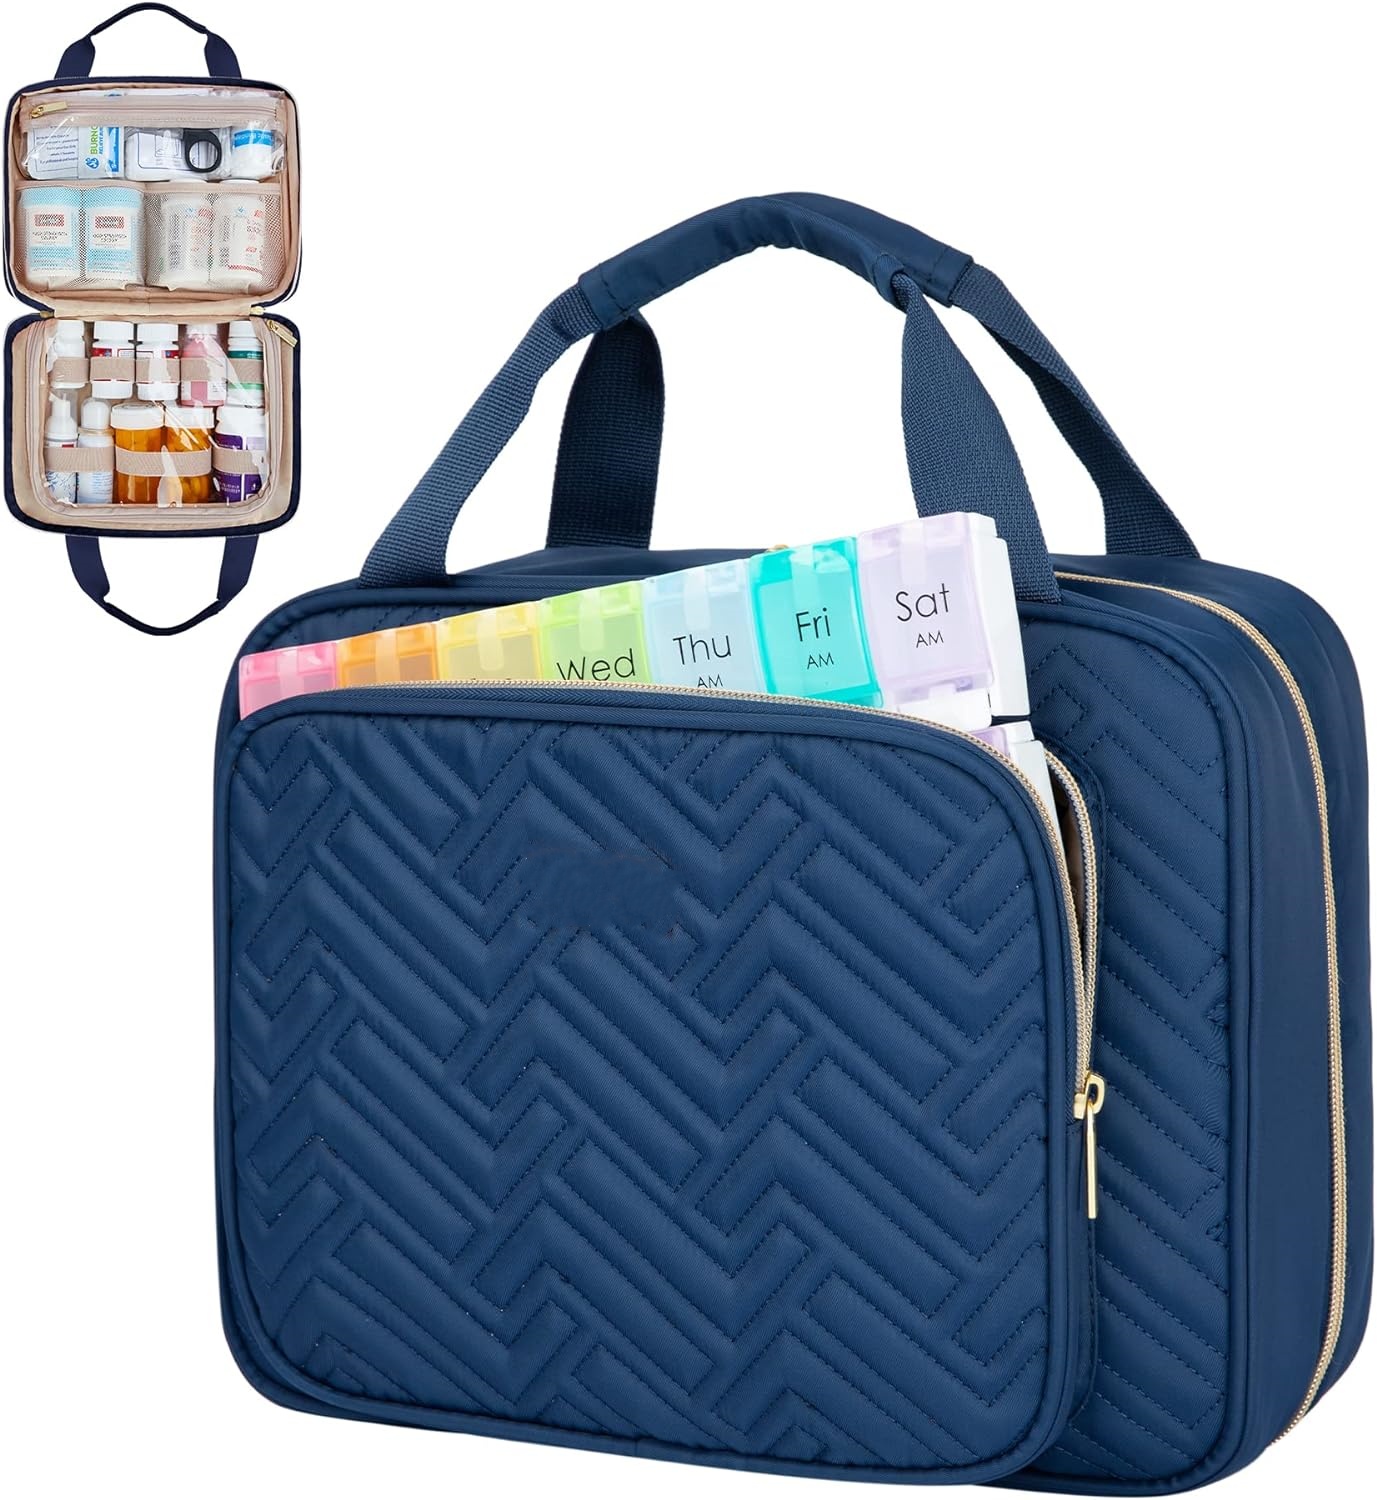 Travel Pill Bottle Organizer,Medicine Organizer and Storage,Home Medication Bag, Cases,Carrier